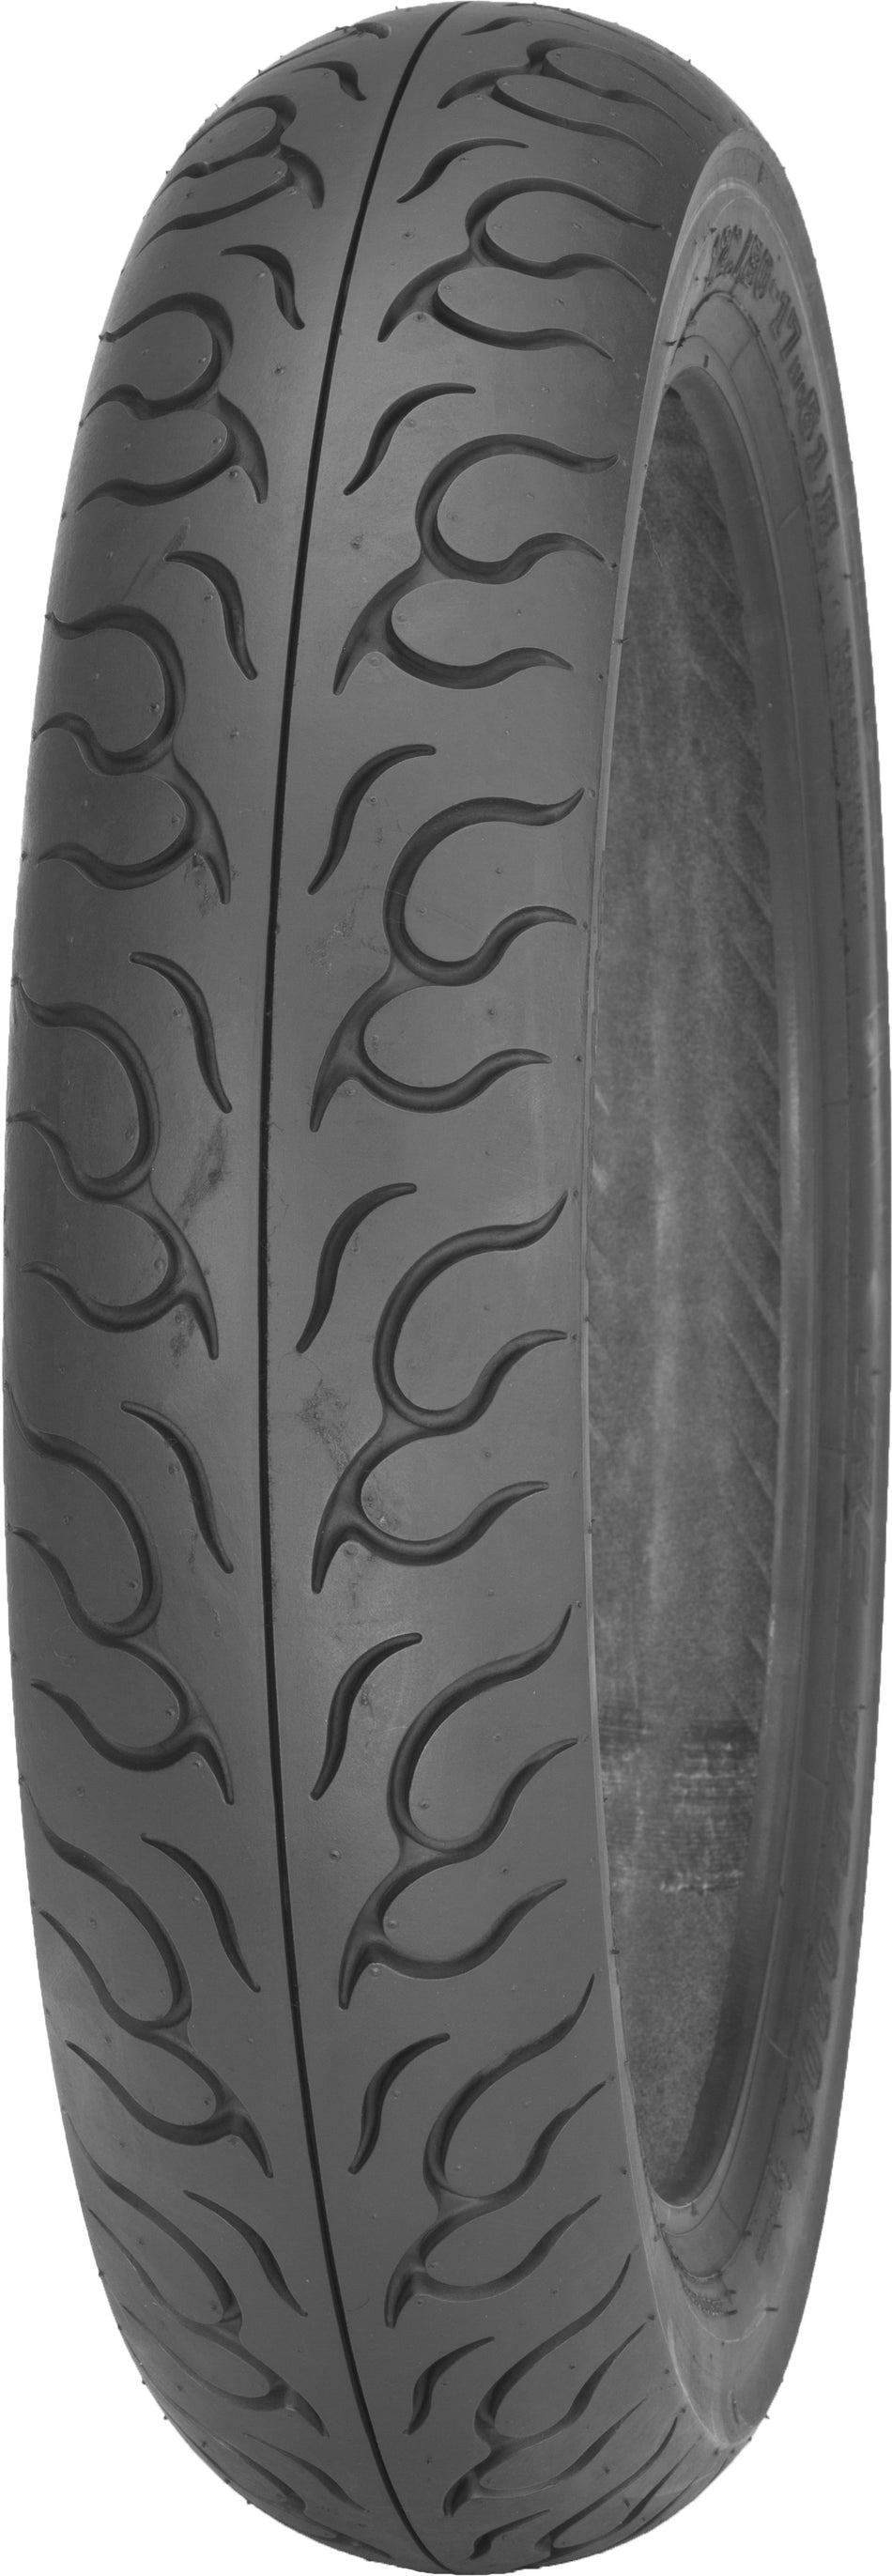 IRC Tire Wf-920 Front 100/90-19 57h Bias 309644